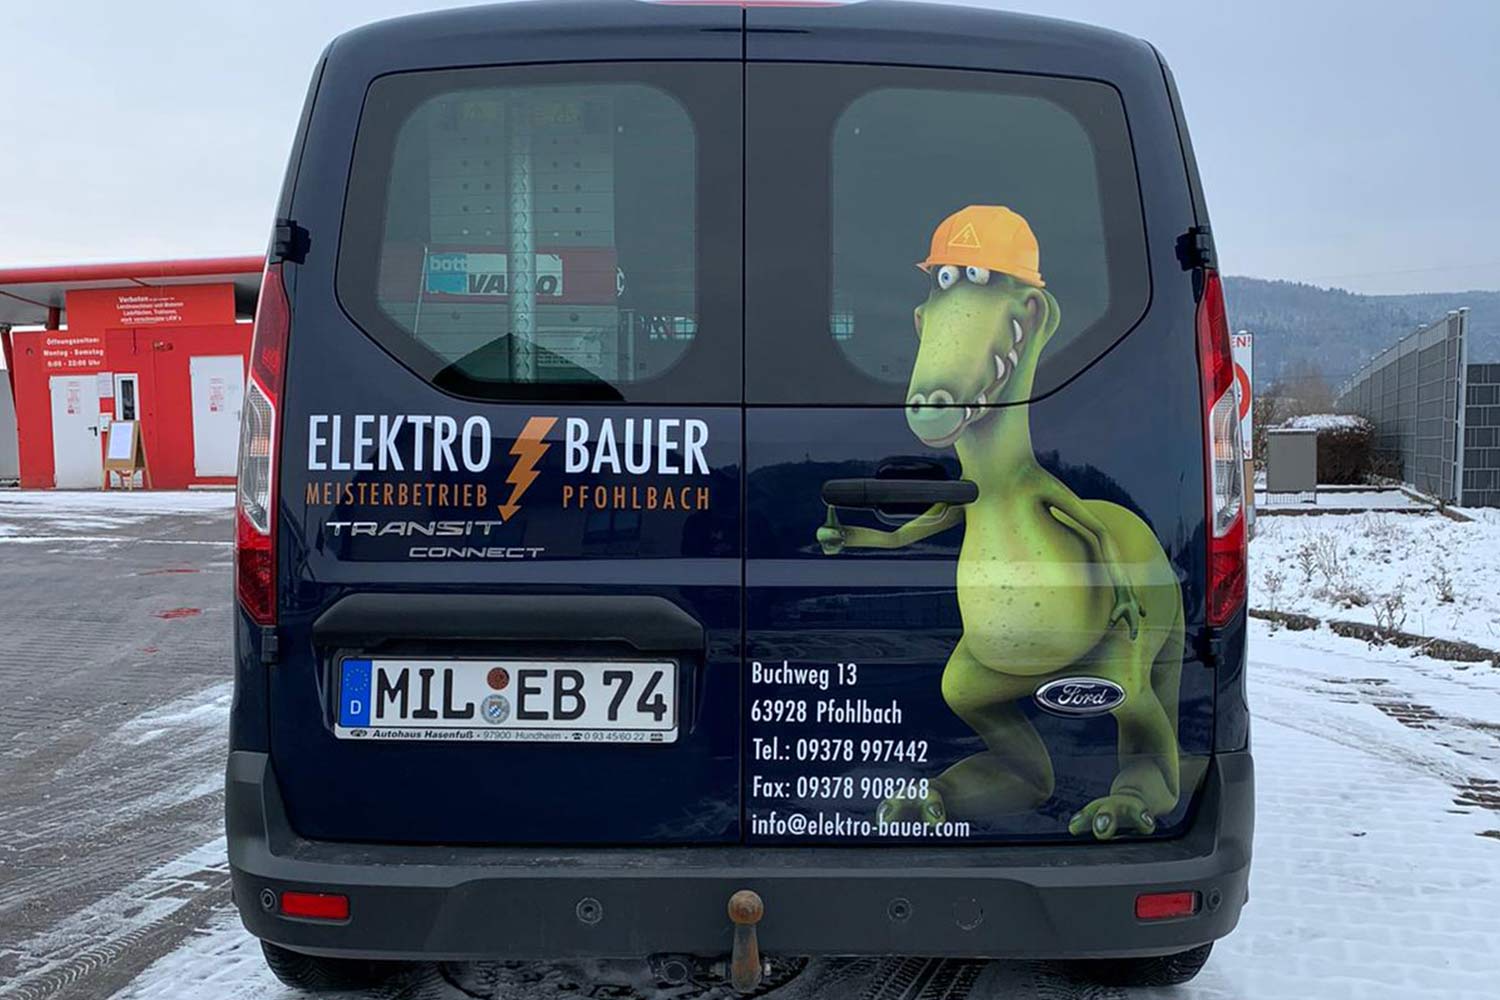 Elektro Bauer Ford hinten